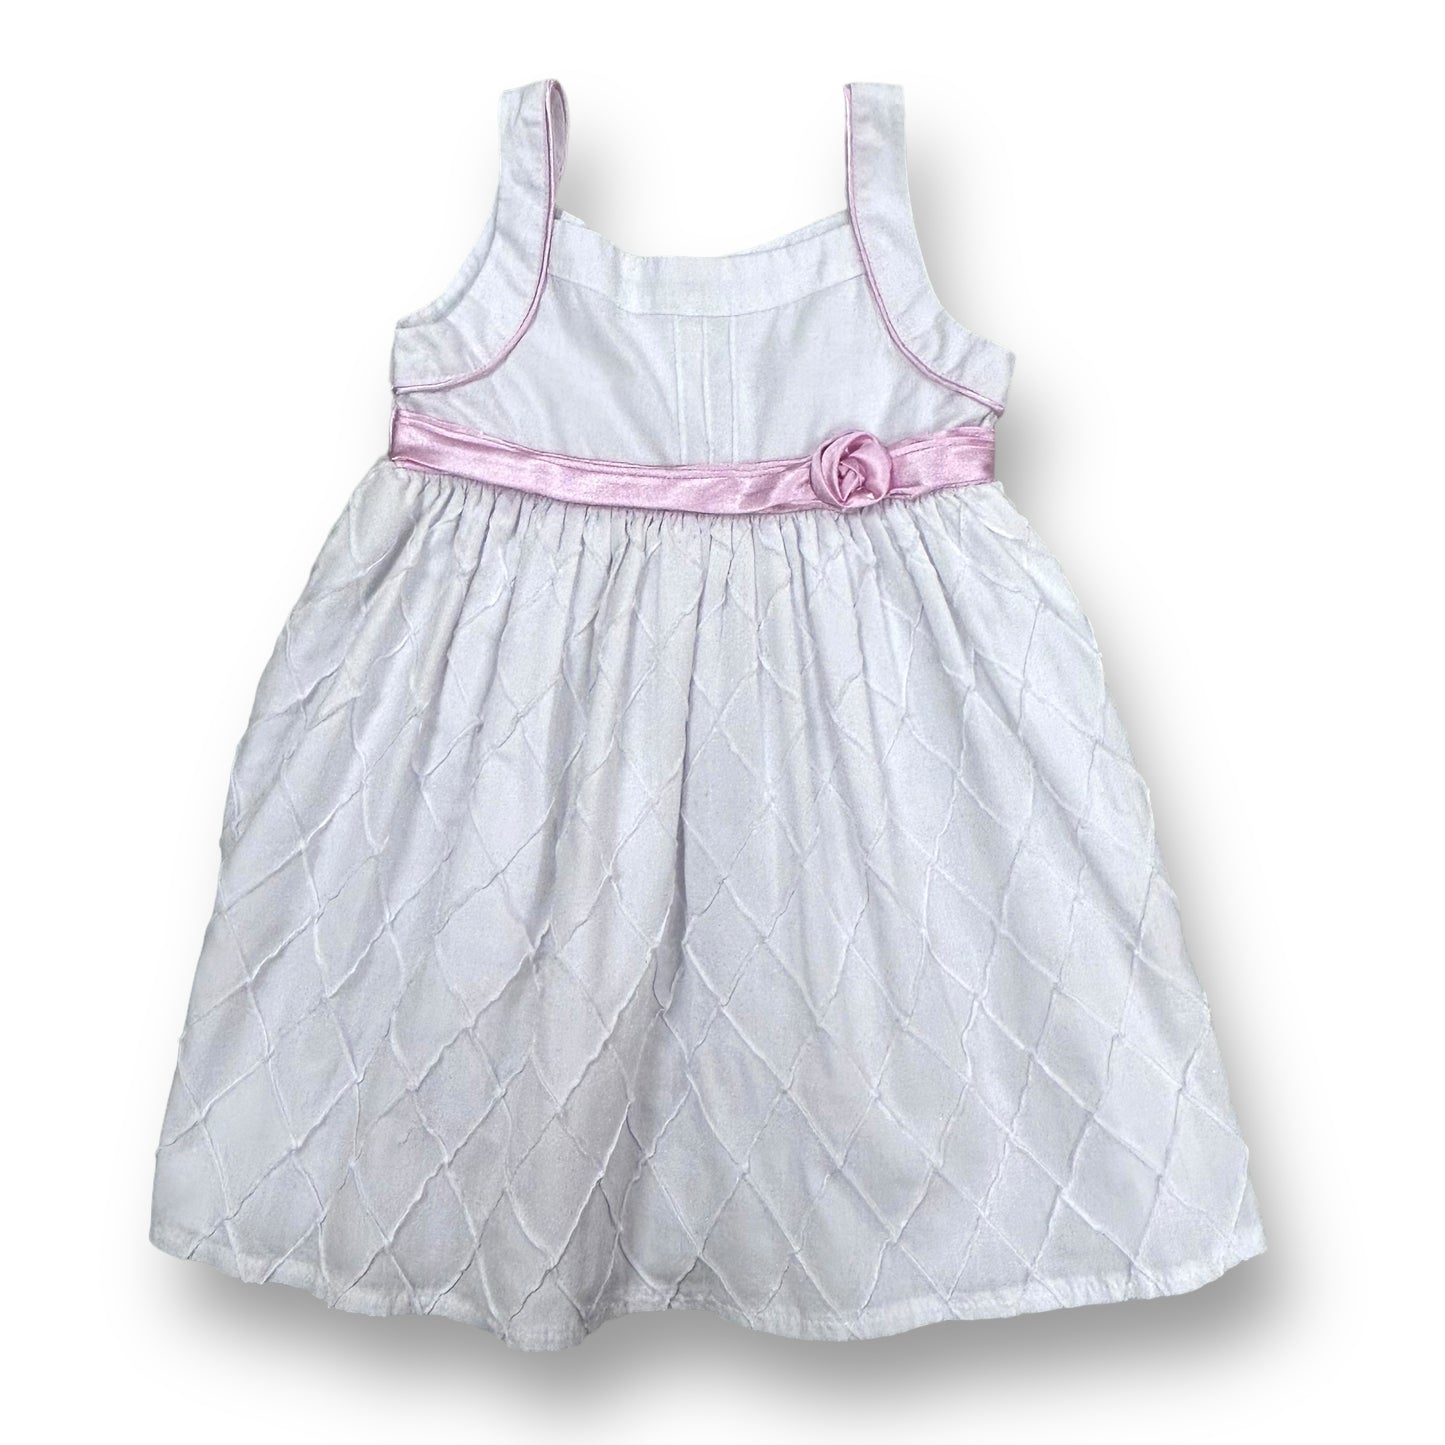 Girls Youngland Size 36 Months White & Pink Fancy Sleeveless Dress